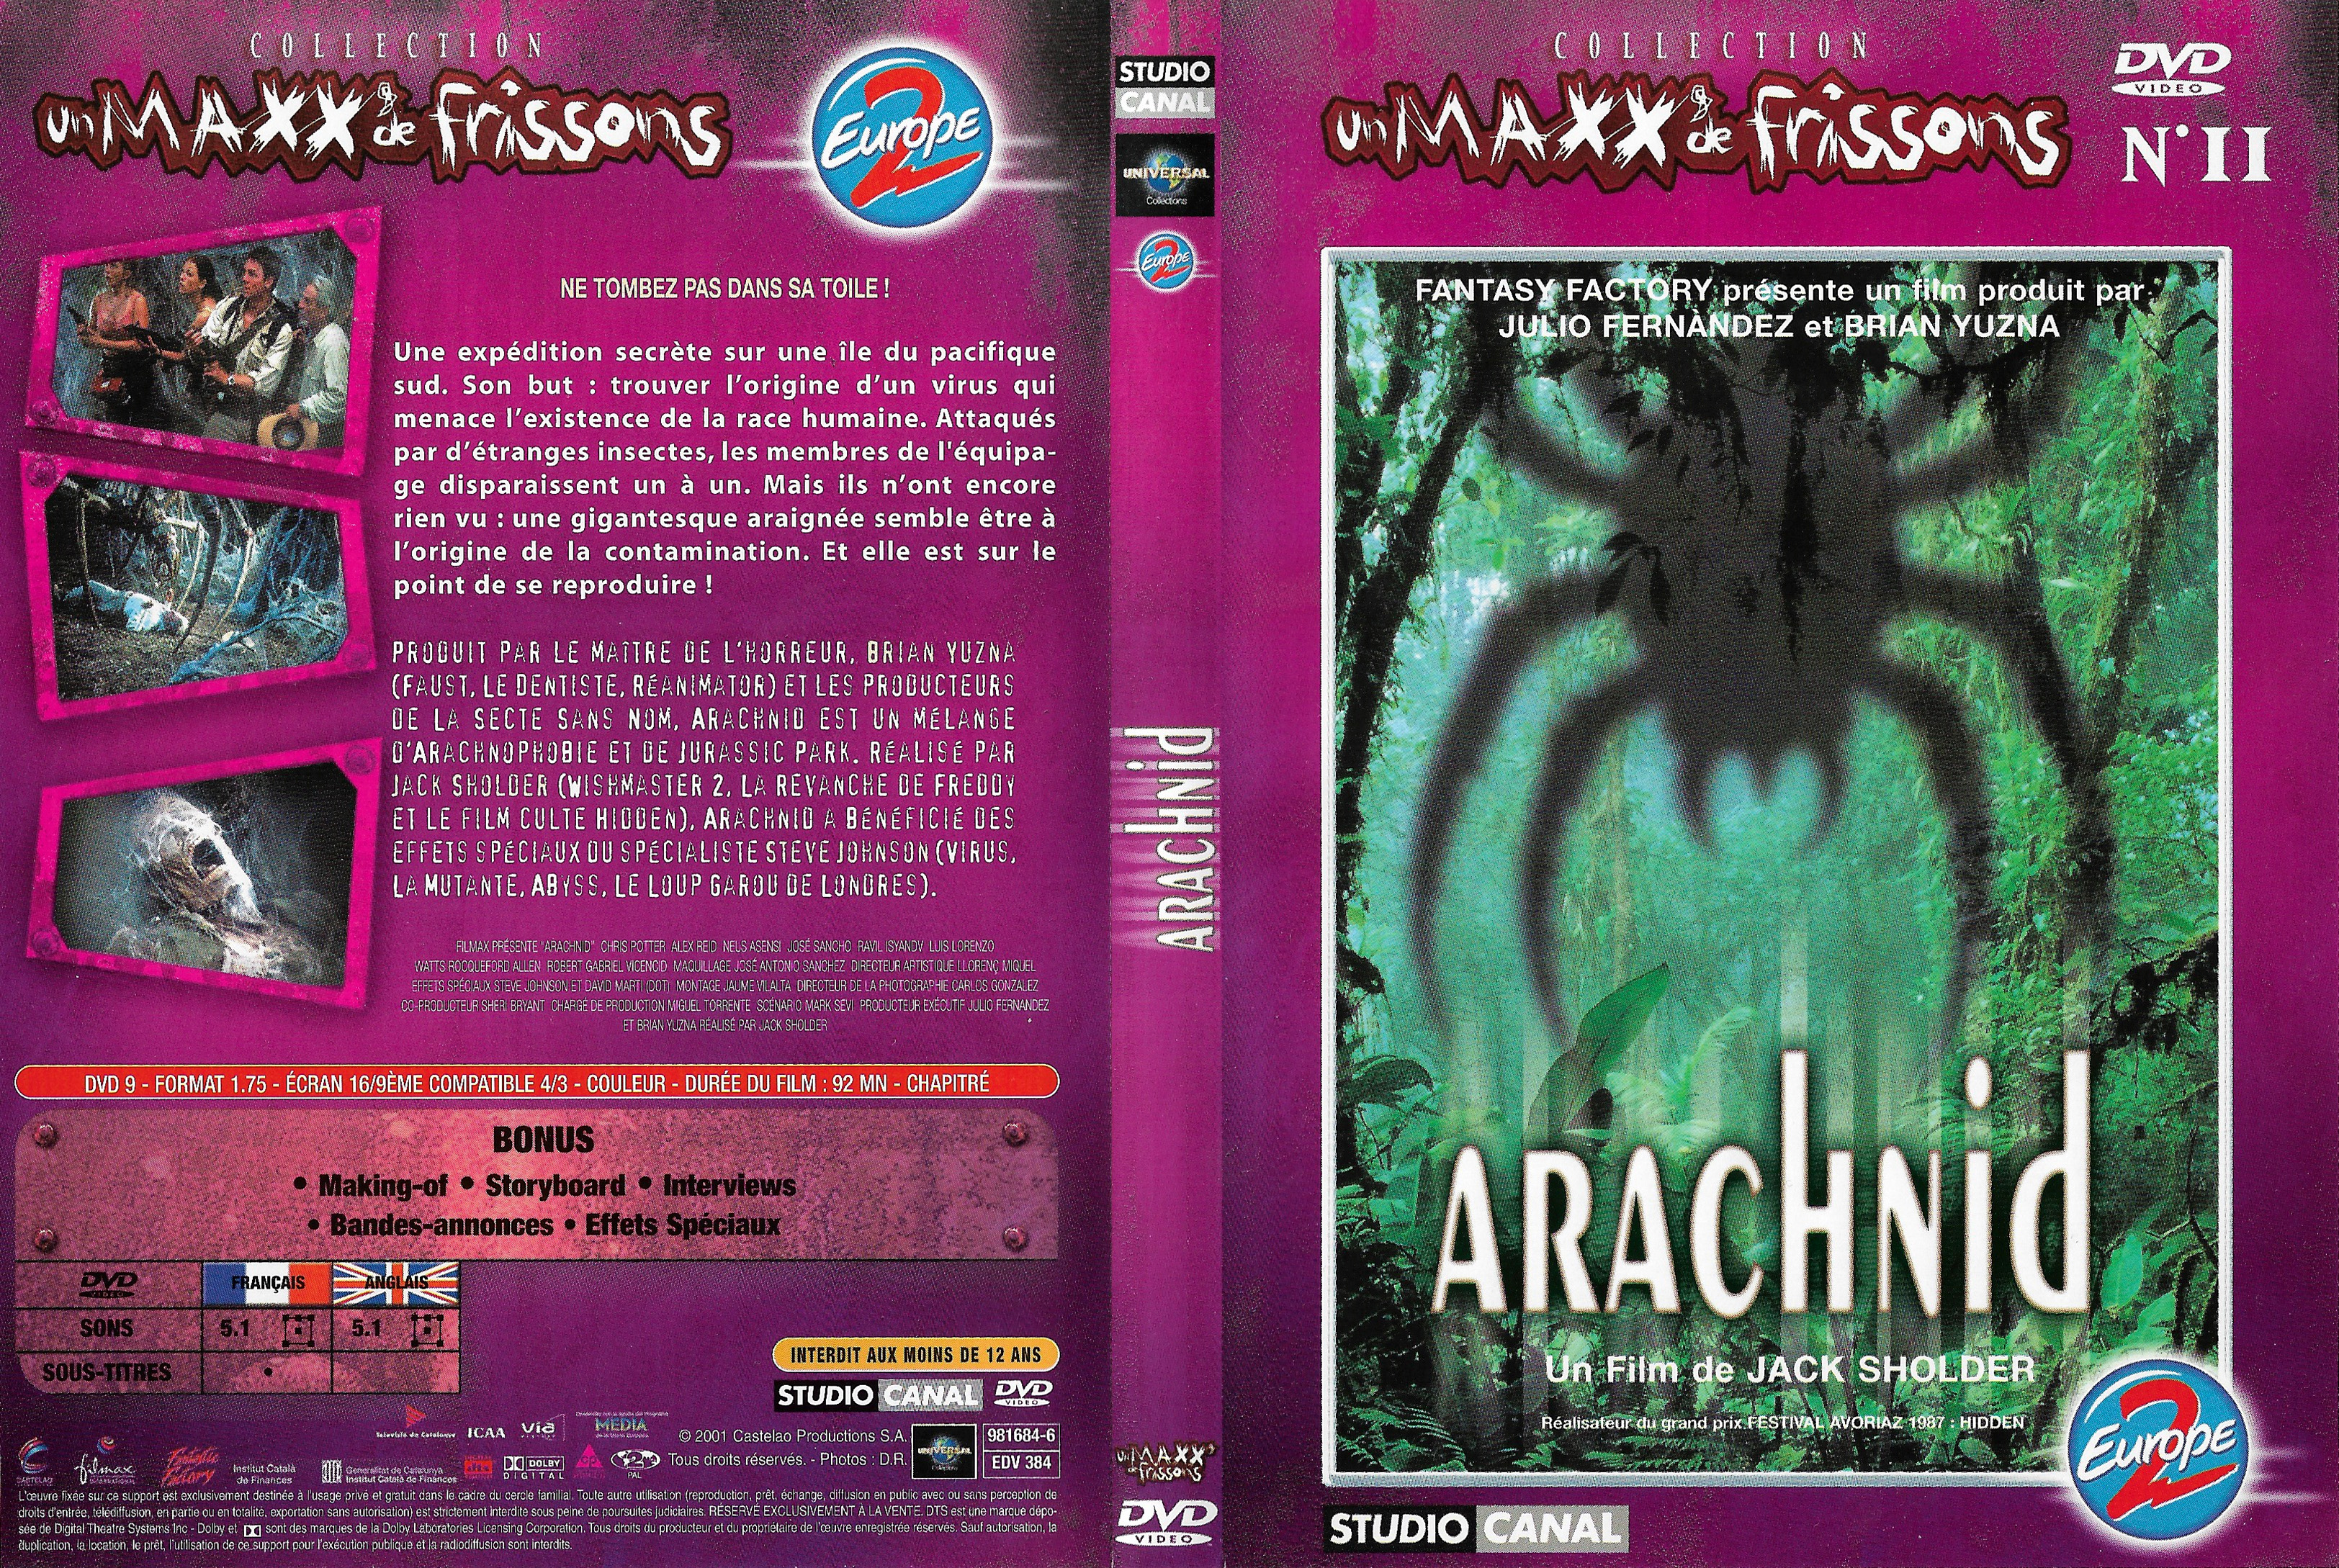 Jaquette DVD Arachnid v3